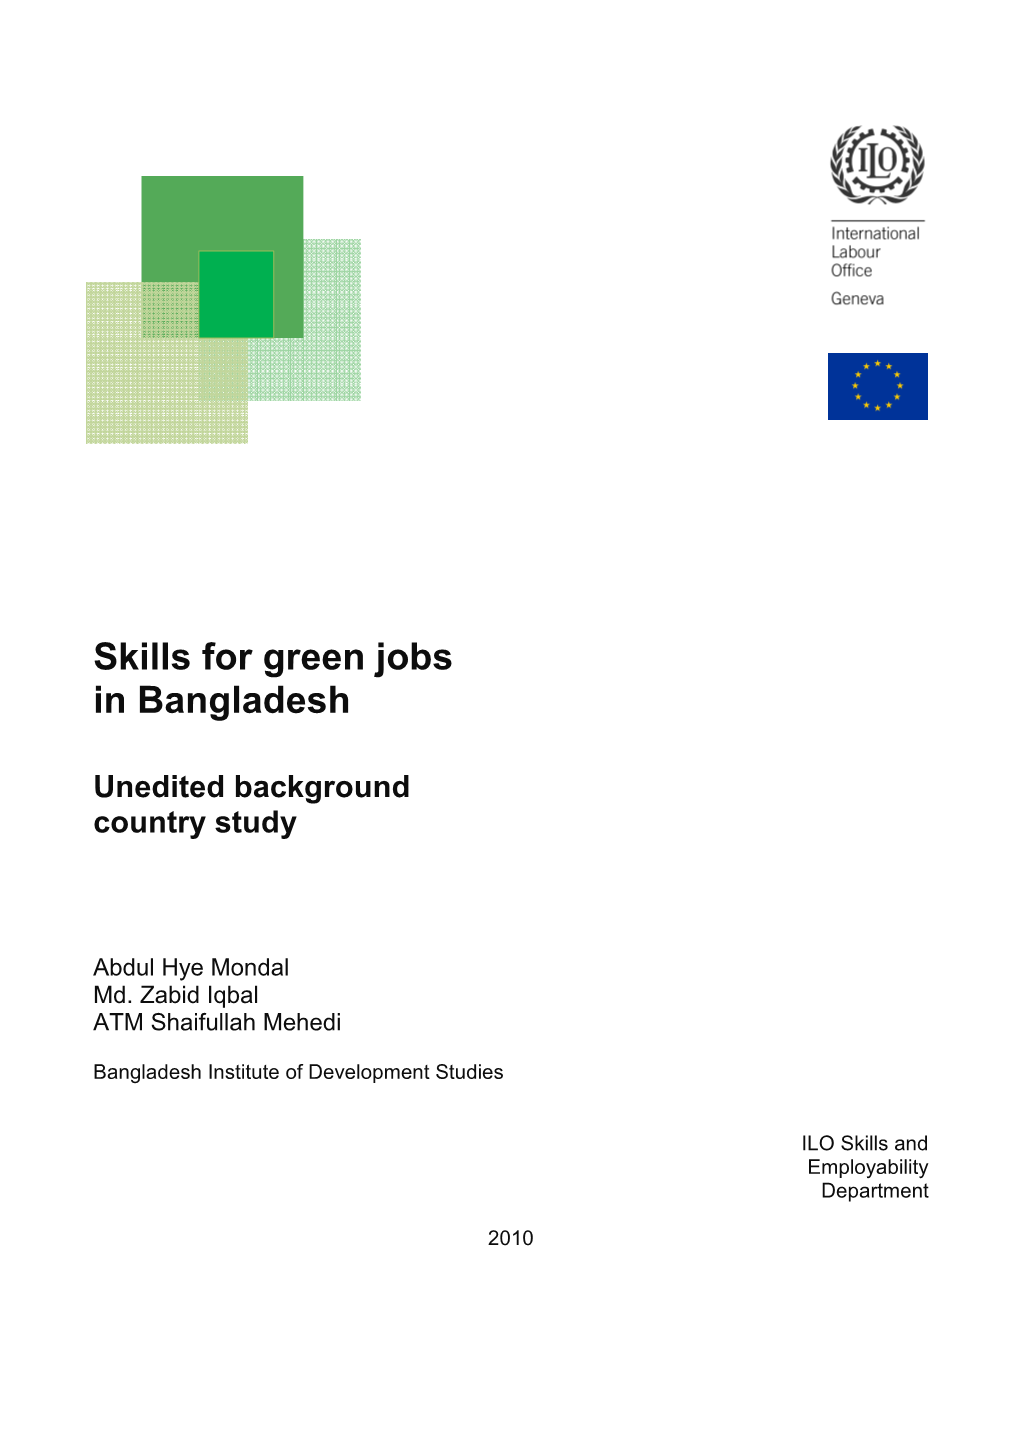 Skills for Green Jobs in Bangladesh